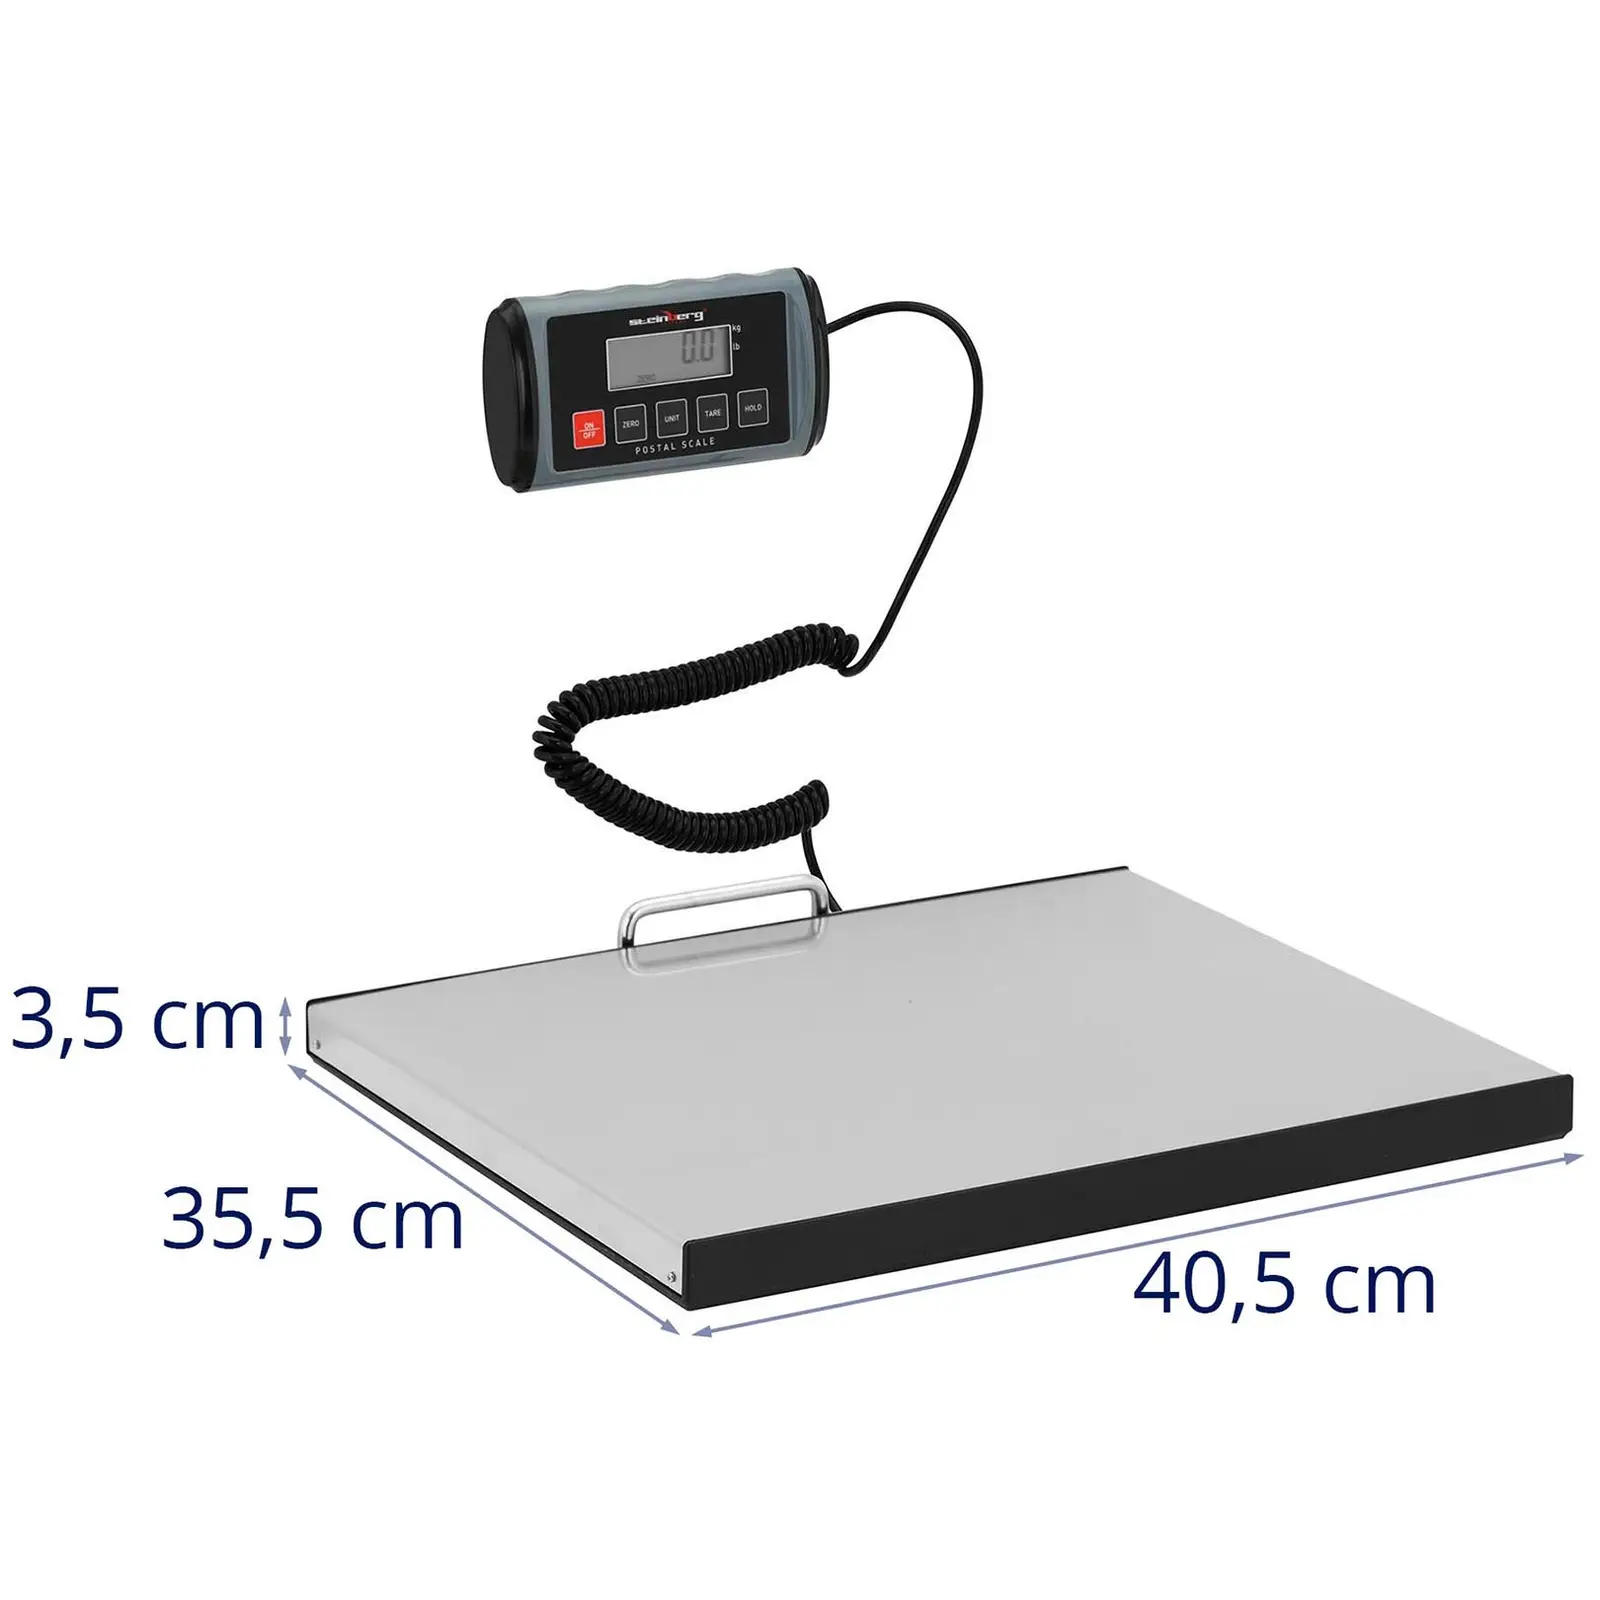 Pakettivaaka - 200 kg / 0,1 kg - 35,5 x 40,5 cm - ulkoinen LCD-näyttö